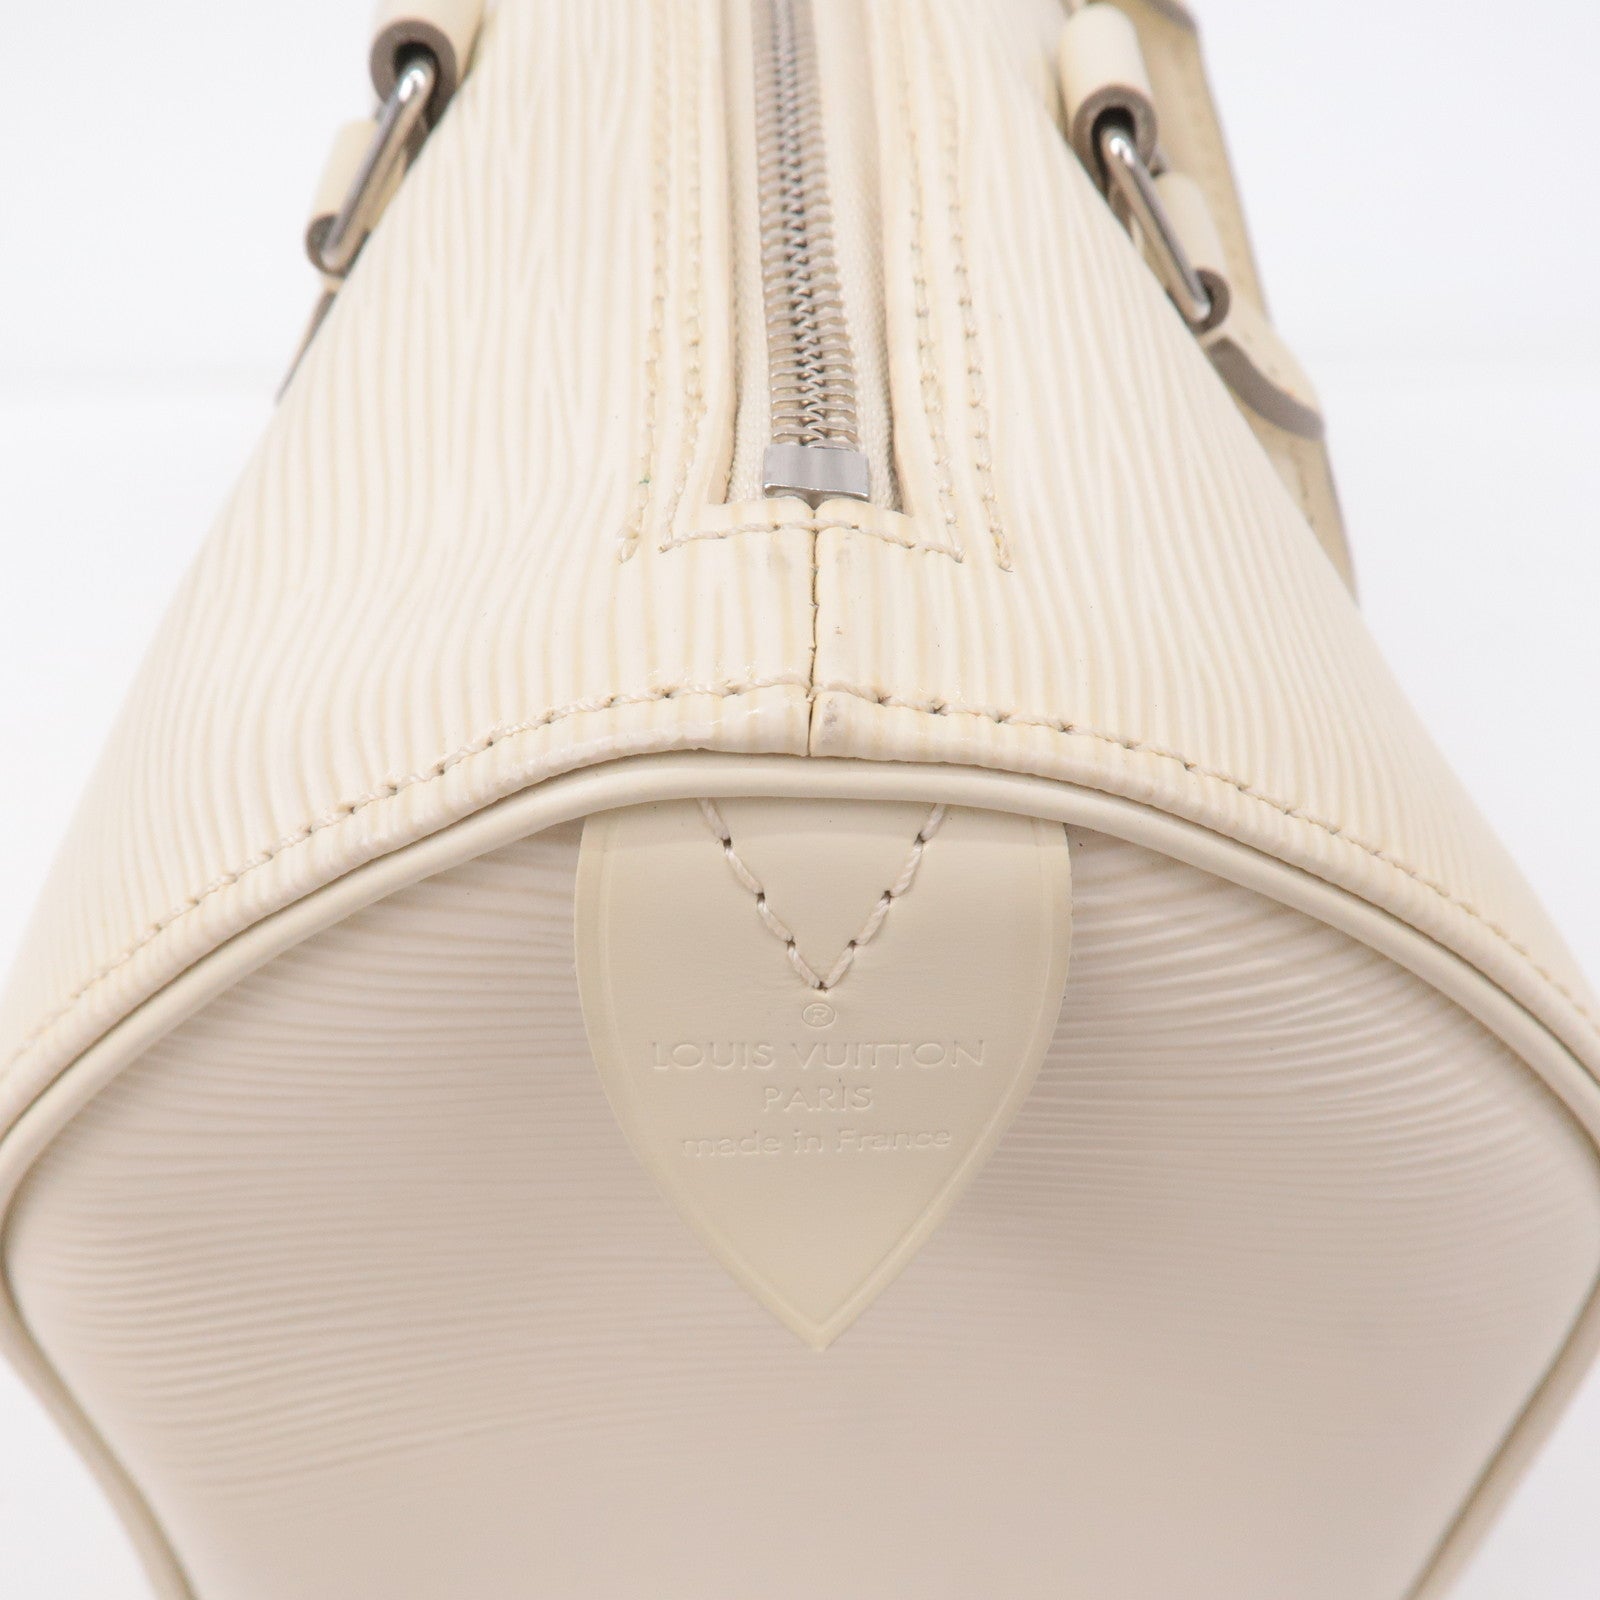 Preloved Authentic Louis Vuitton Monogram Speedy 25 Boston Hand Bag Purse  SP0954